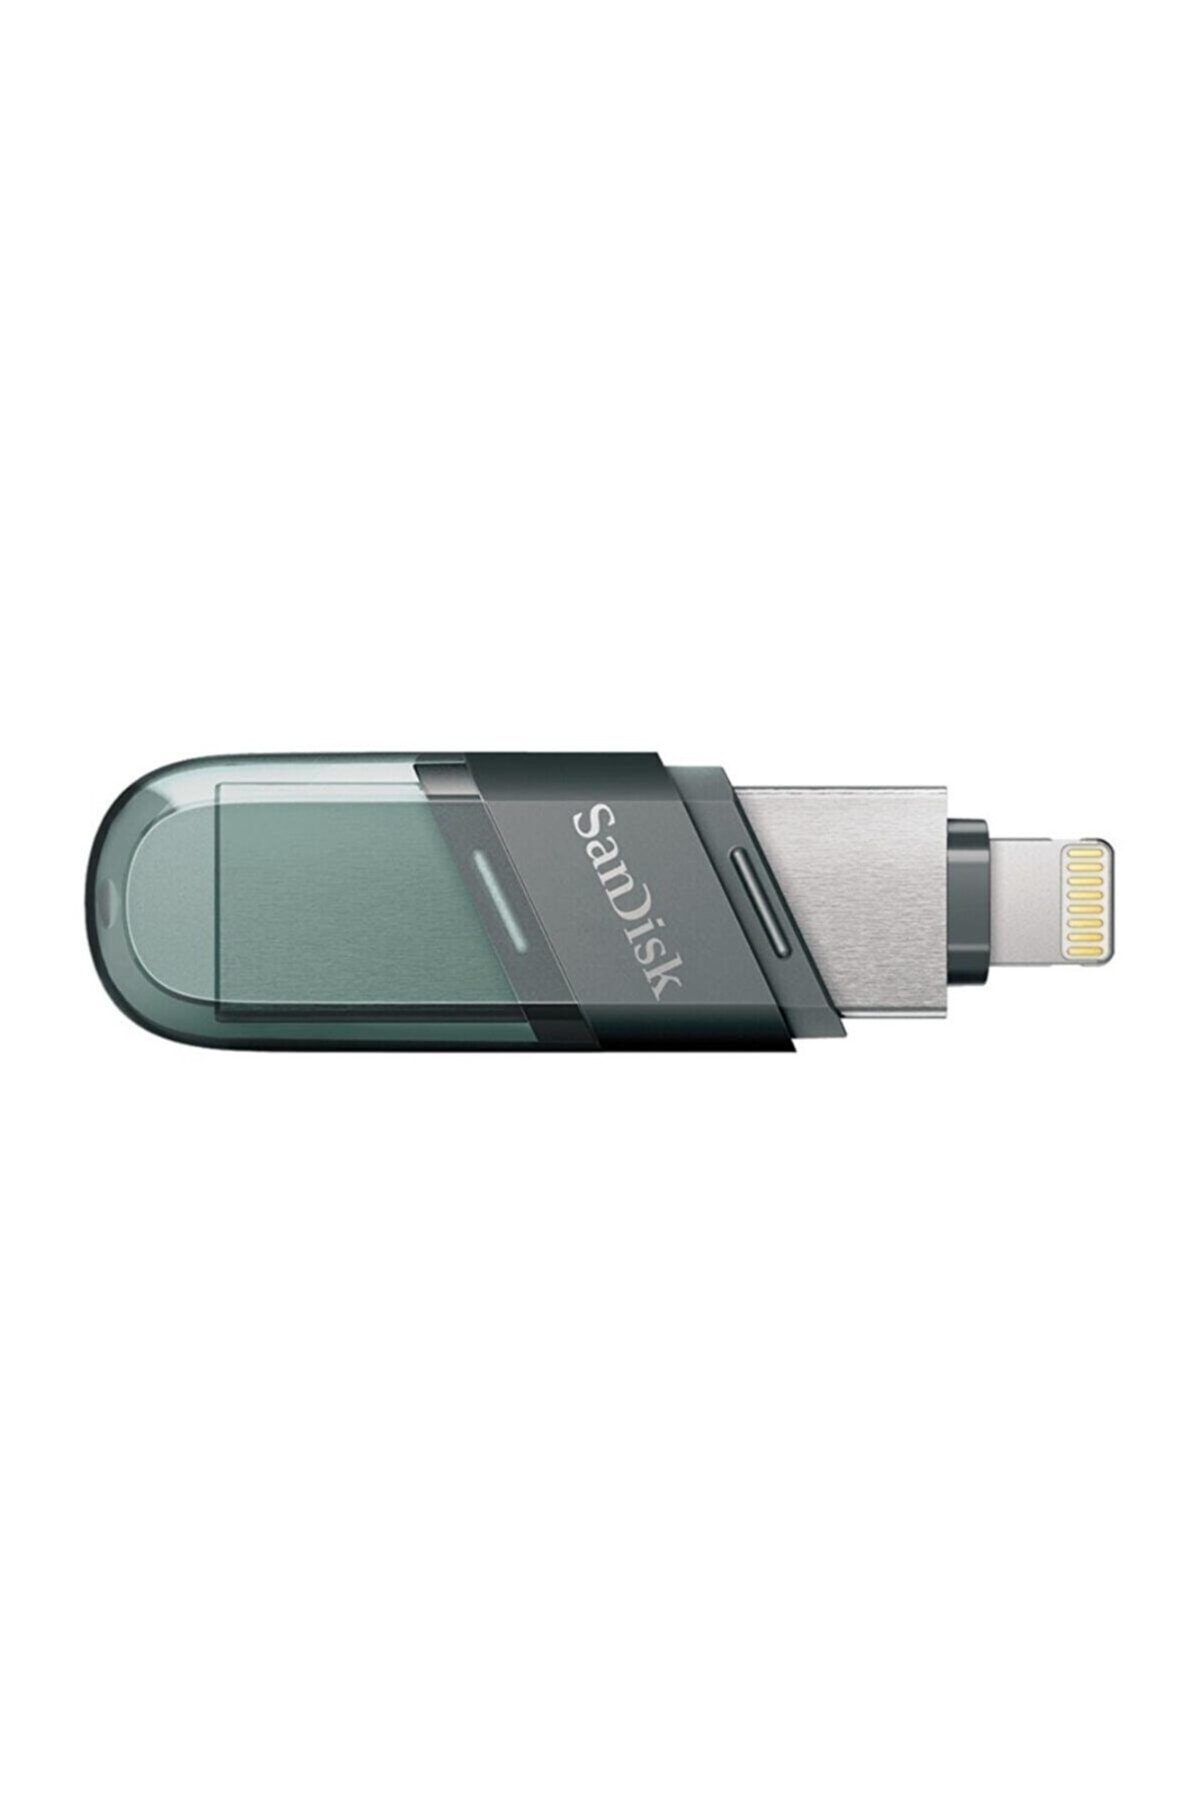 iXpand Mini 64GB iPhone USB Bellek SDIX40N-064G-GN6NN